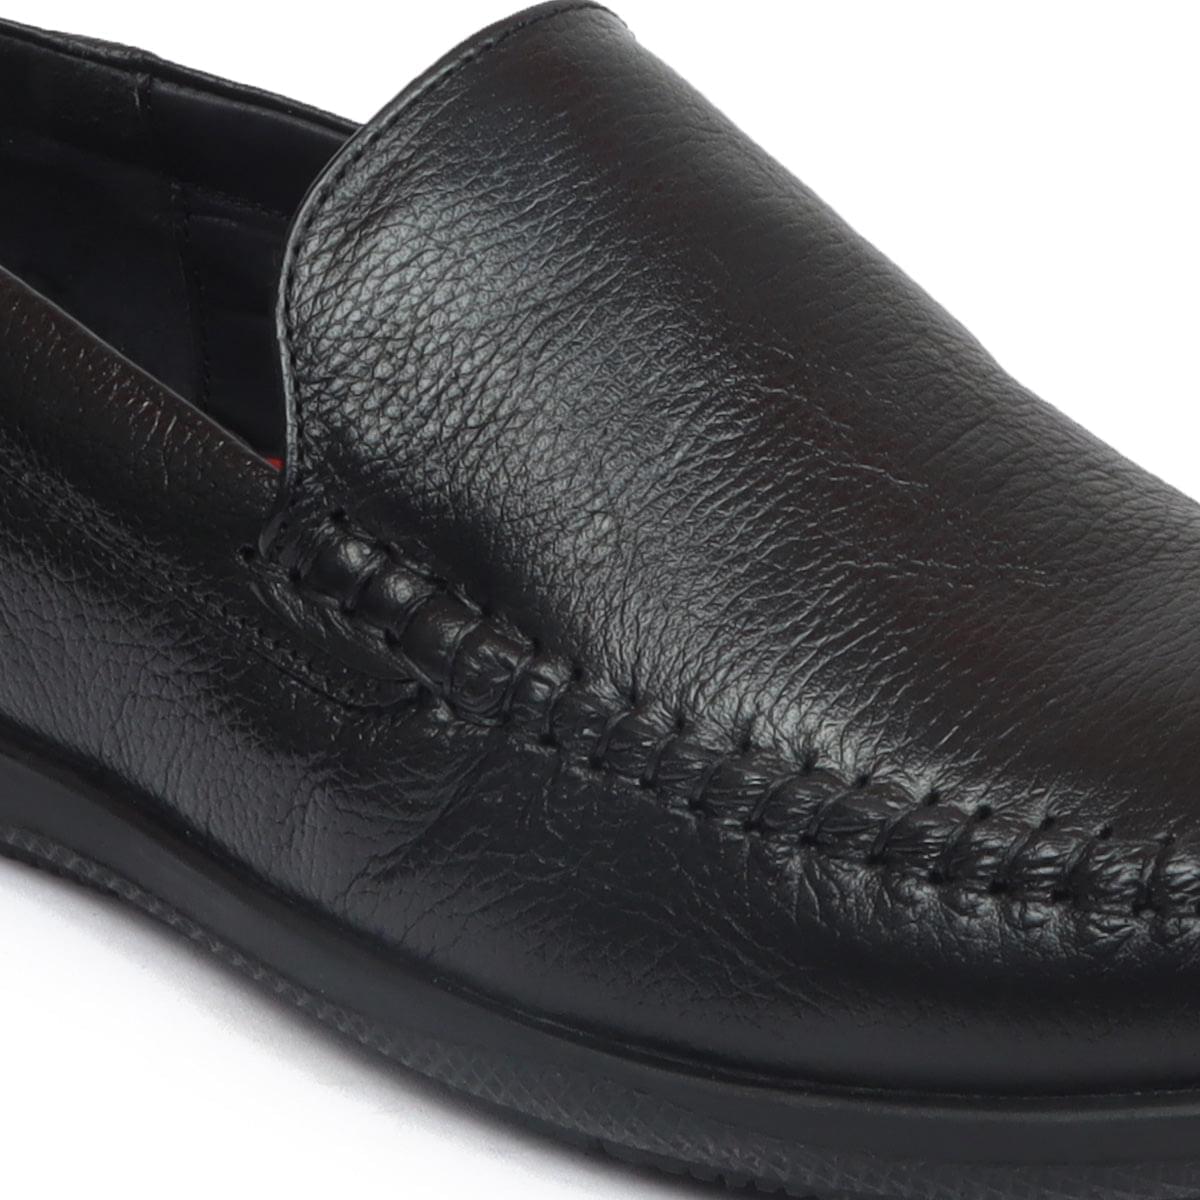 Formal Shoes for Men A-1138